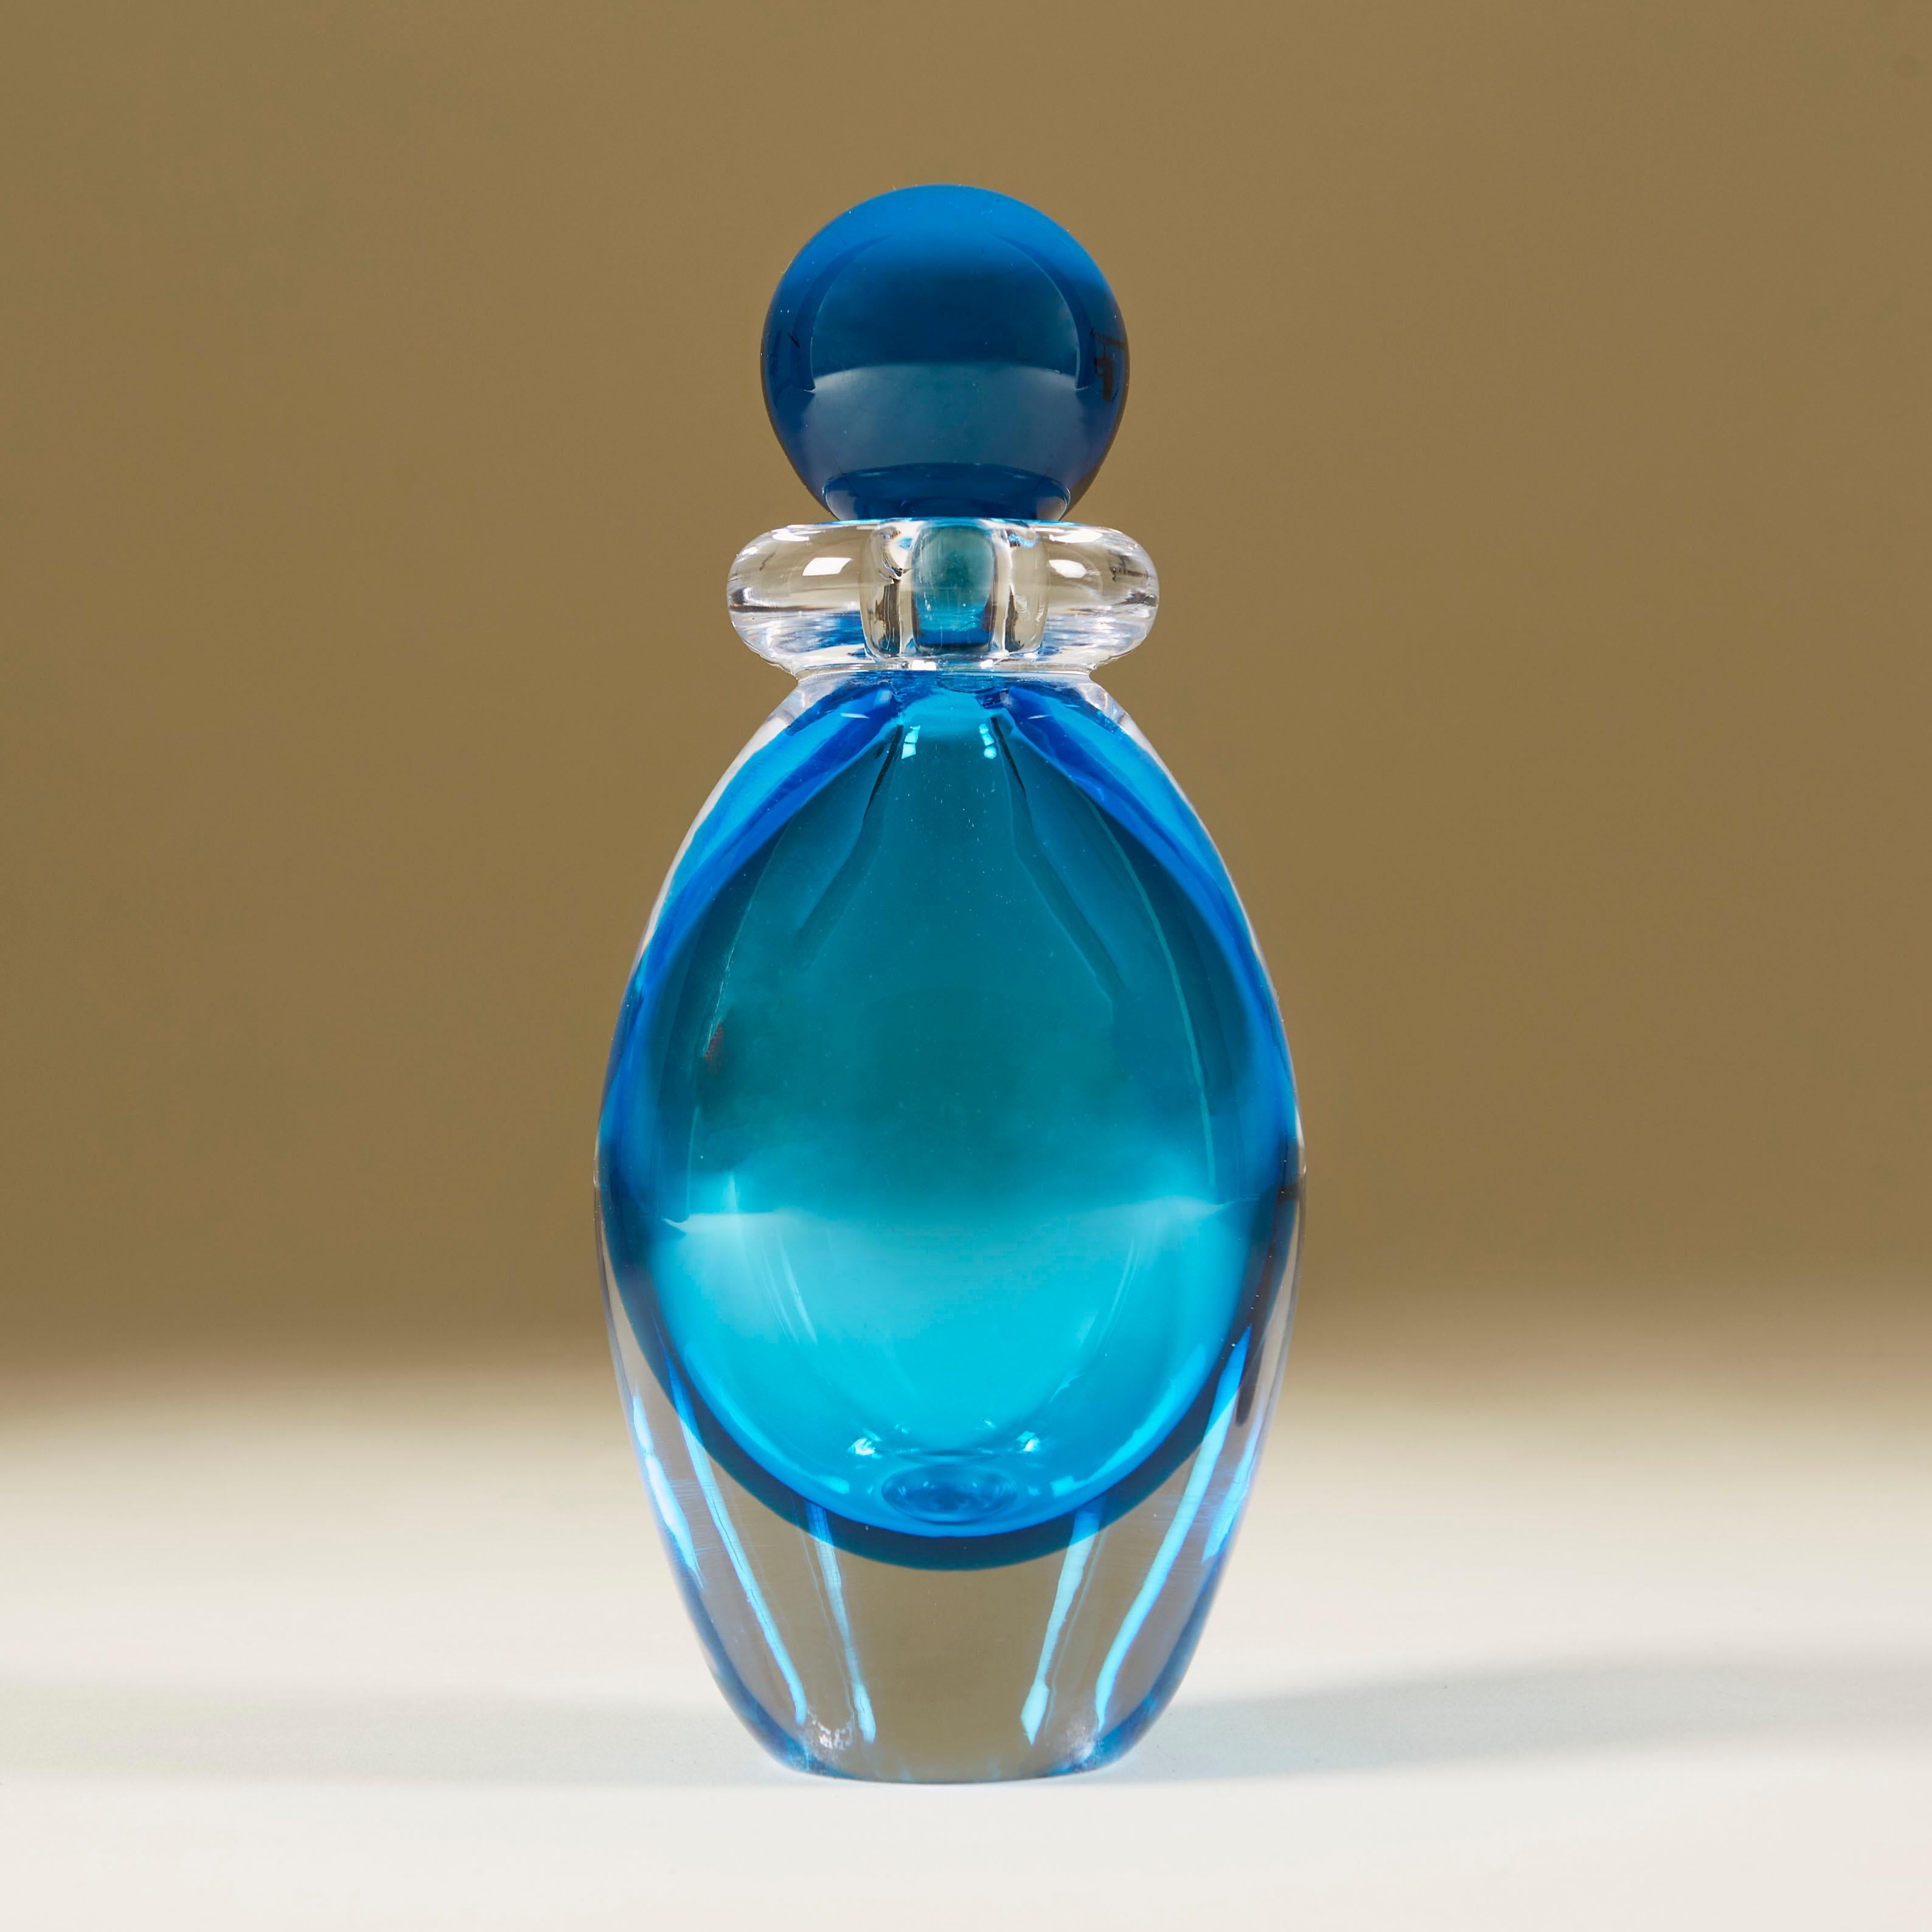 Großer aquamarinfarbener Parfümflakon aus klarem Murano-Glas mit klarem Glaskragen und aquamarinfarbenem Kugelstopfen.
